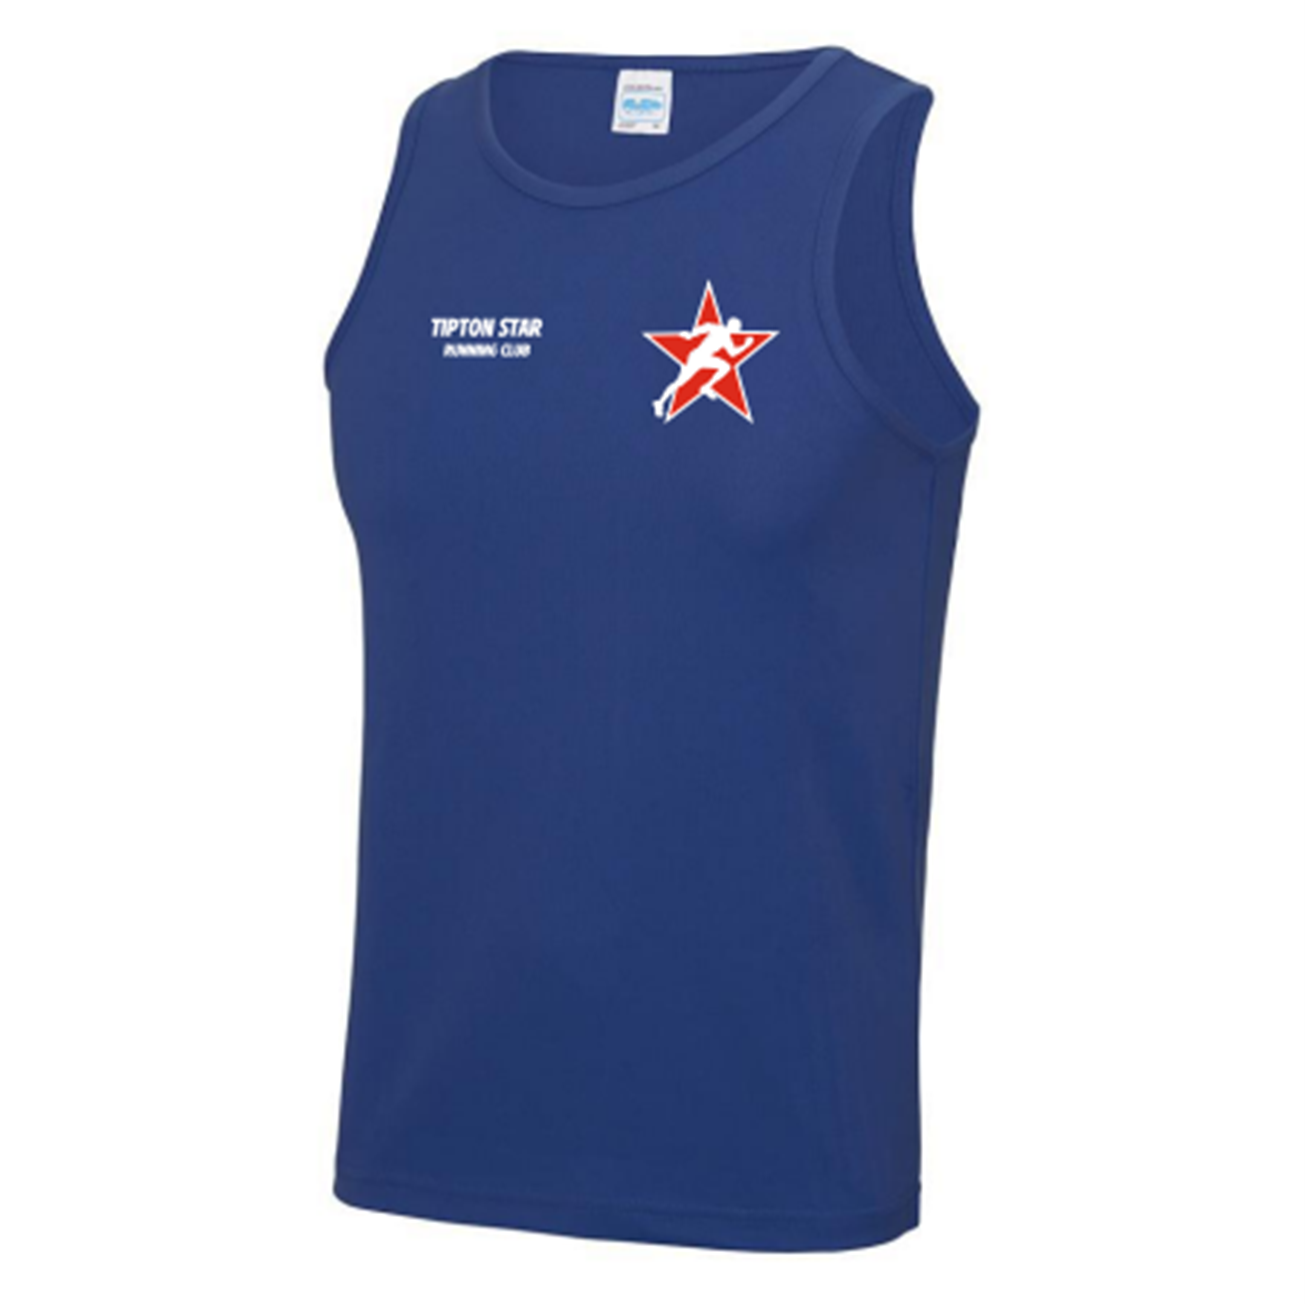 Tipton Star Running Club - Vest